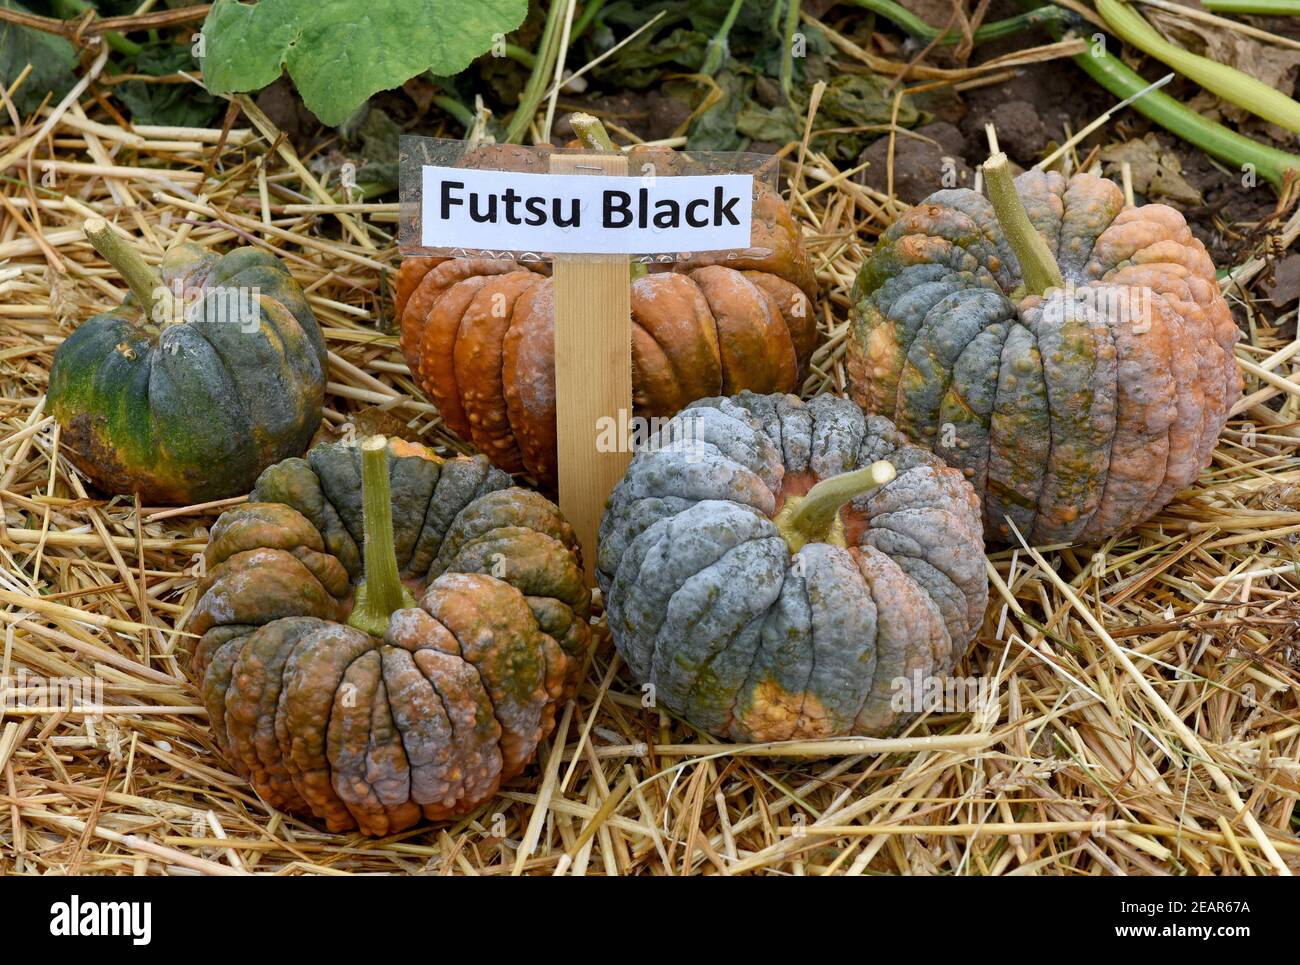 Futsu Black, Kuerbis, Speisekuerbis Stock Photo